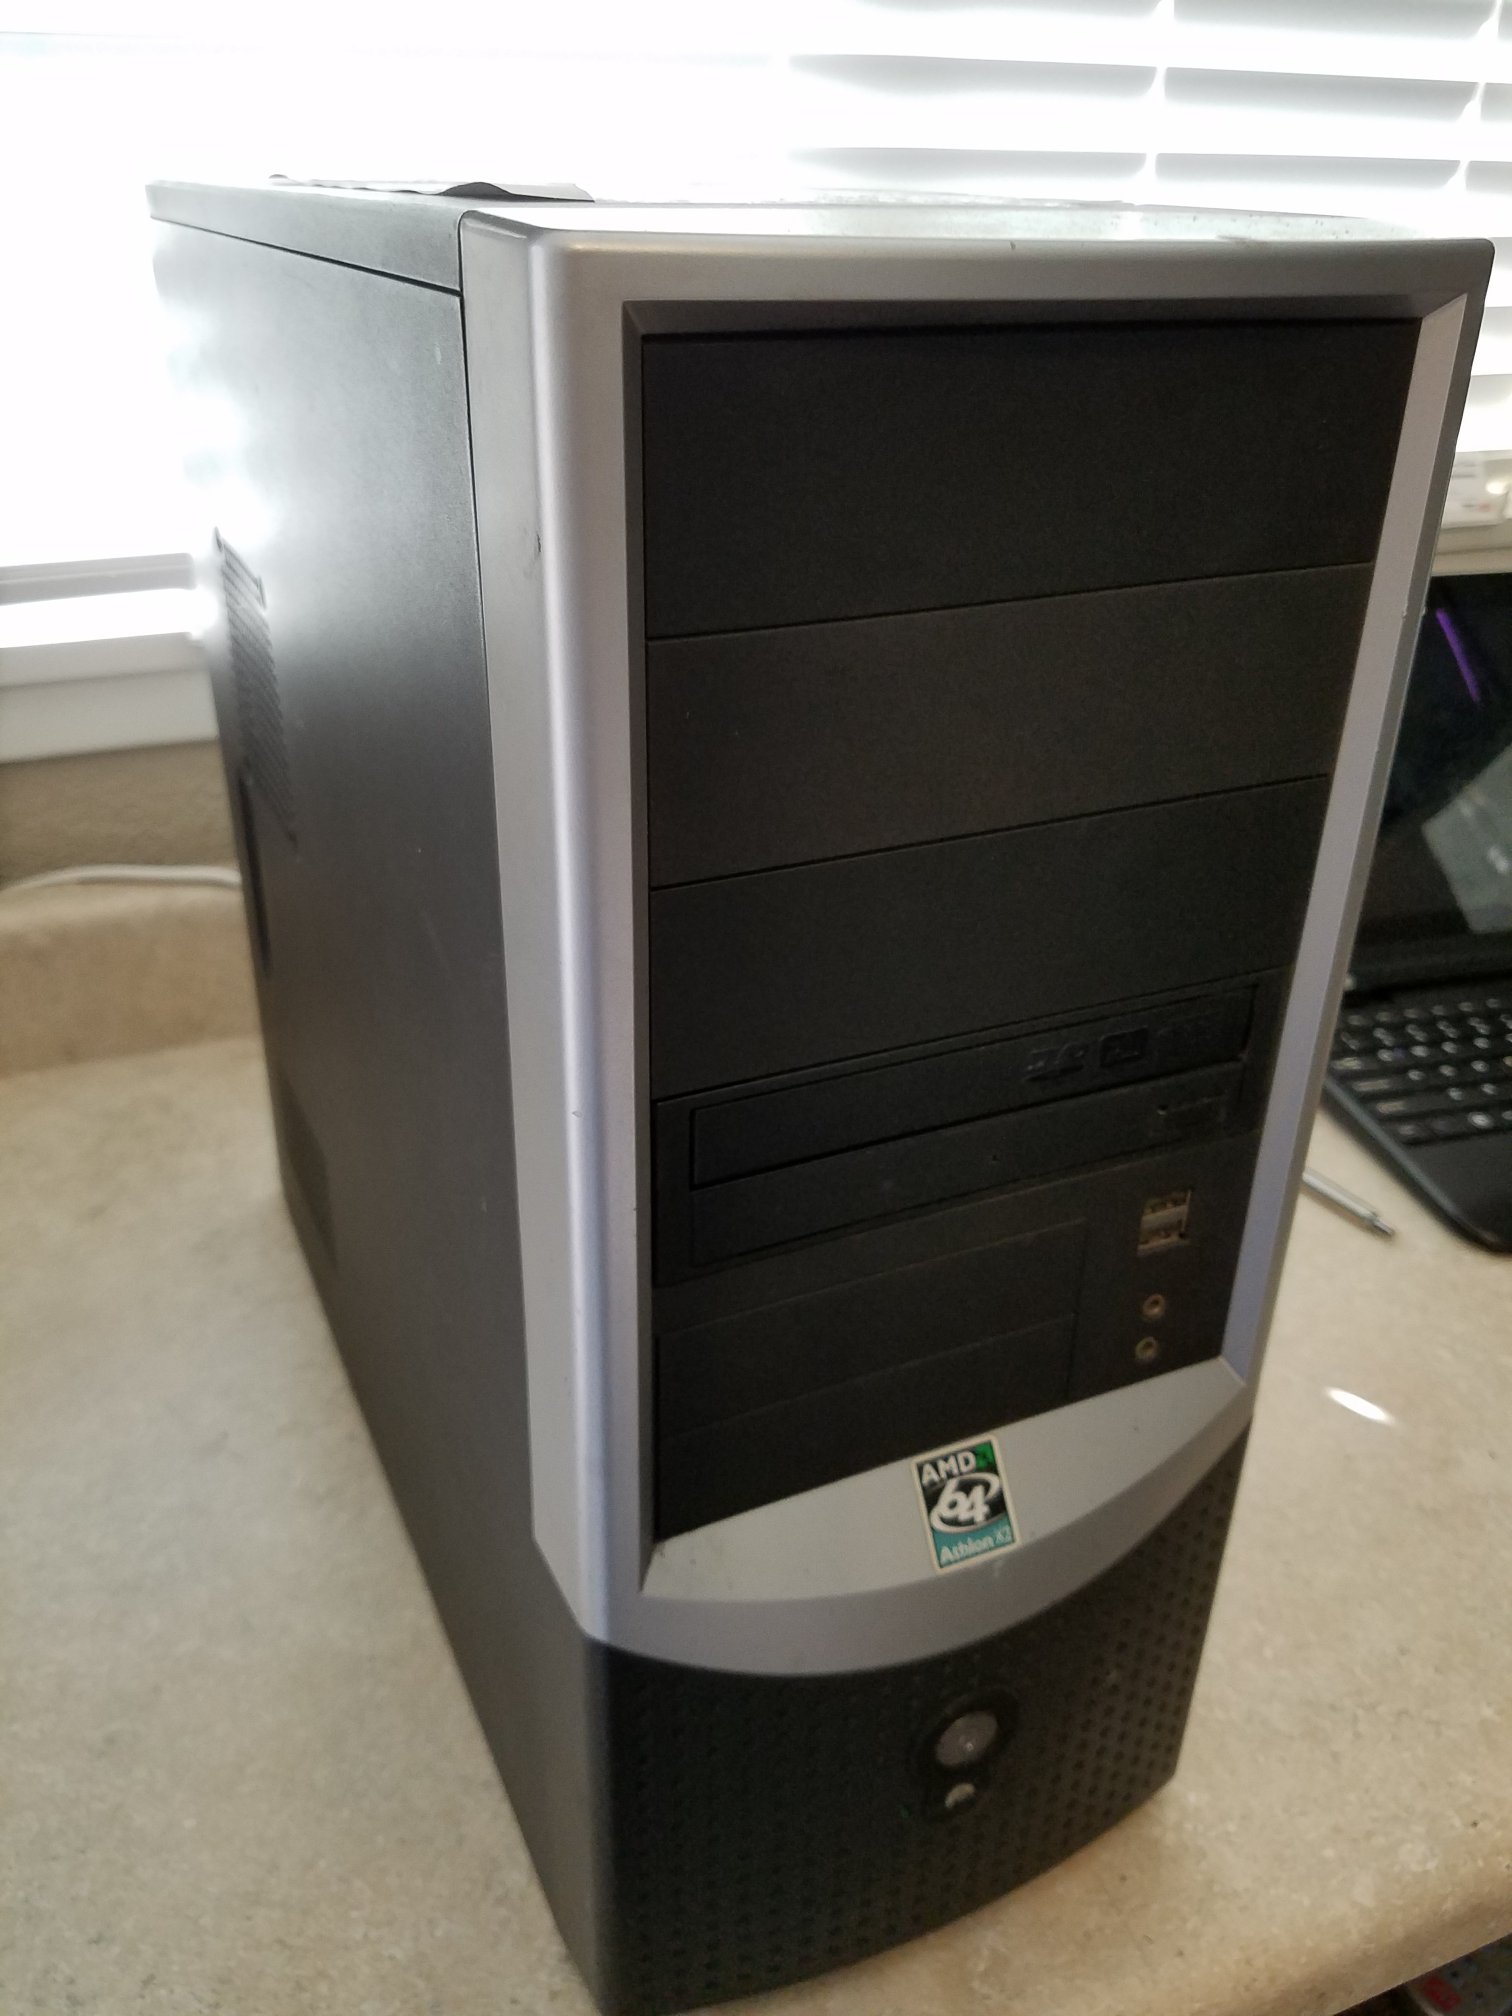 The Computer Savior Desktop PC